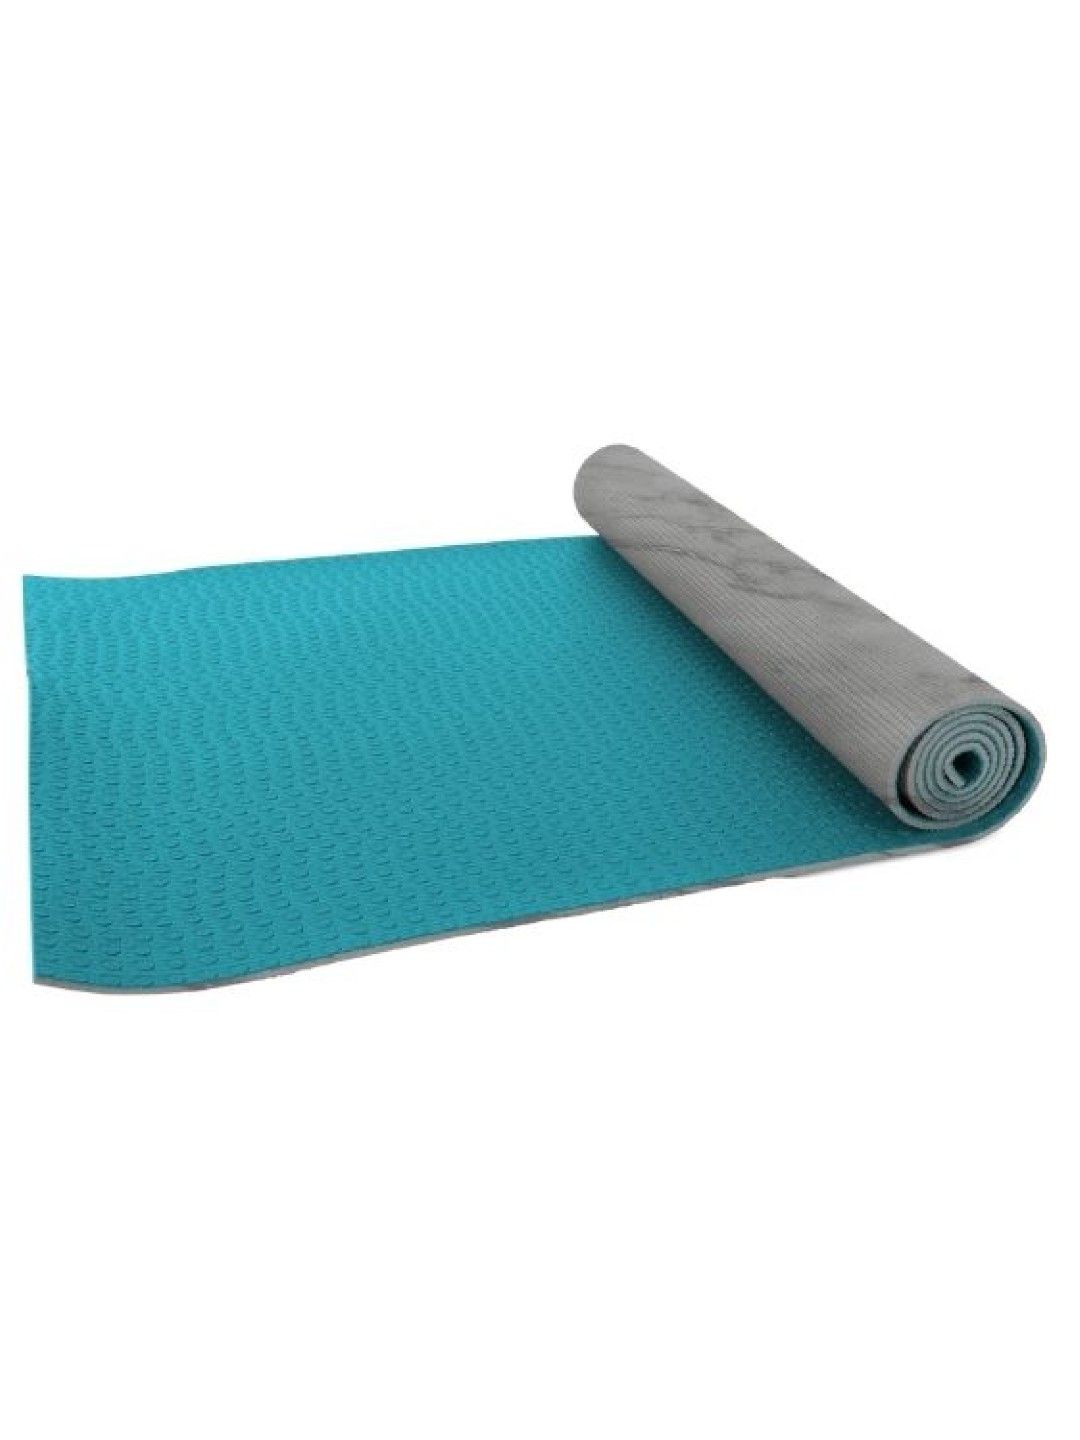 Sunbeams Lifestyle Fitspire Yoga Mat PVC Reversible